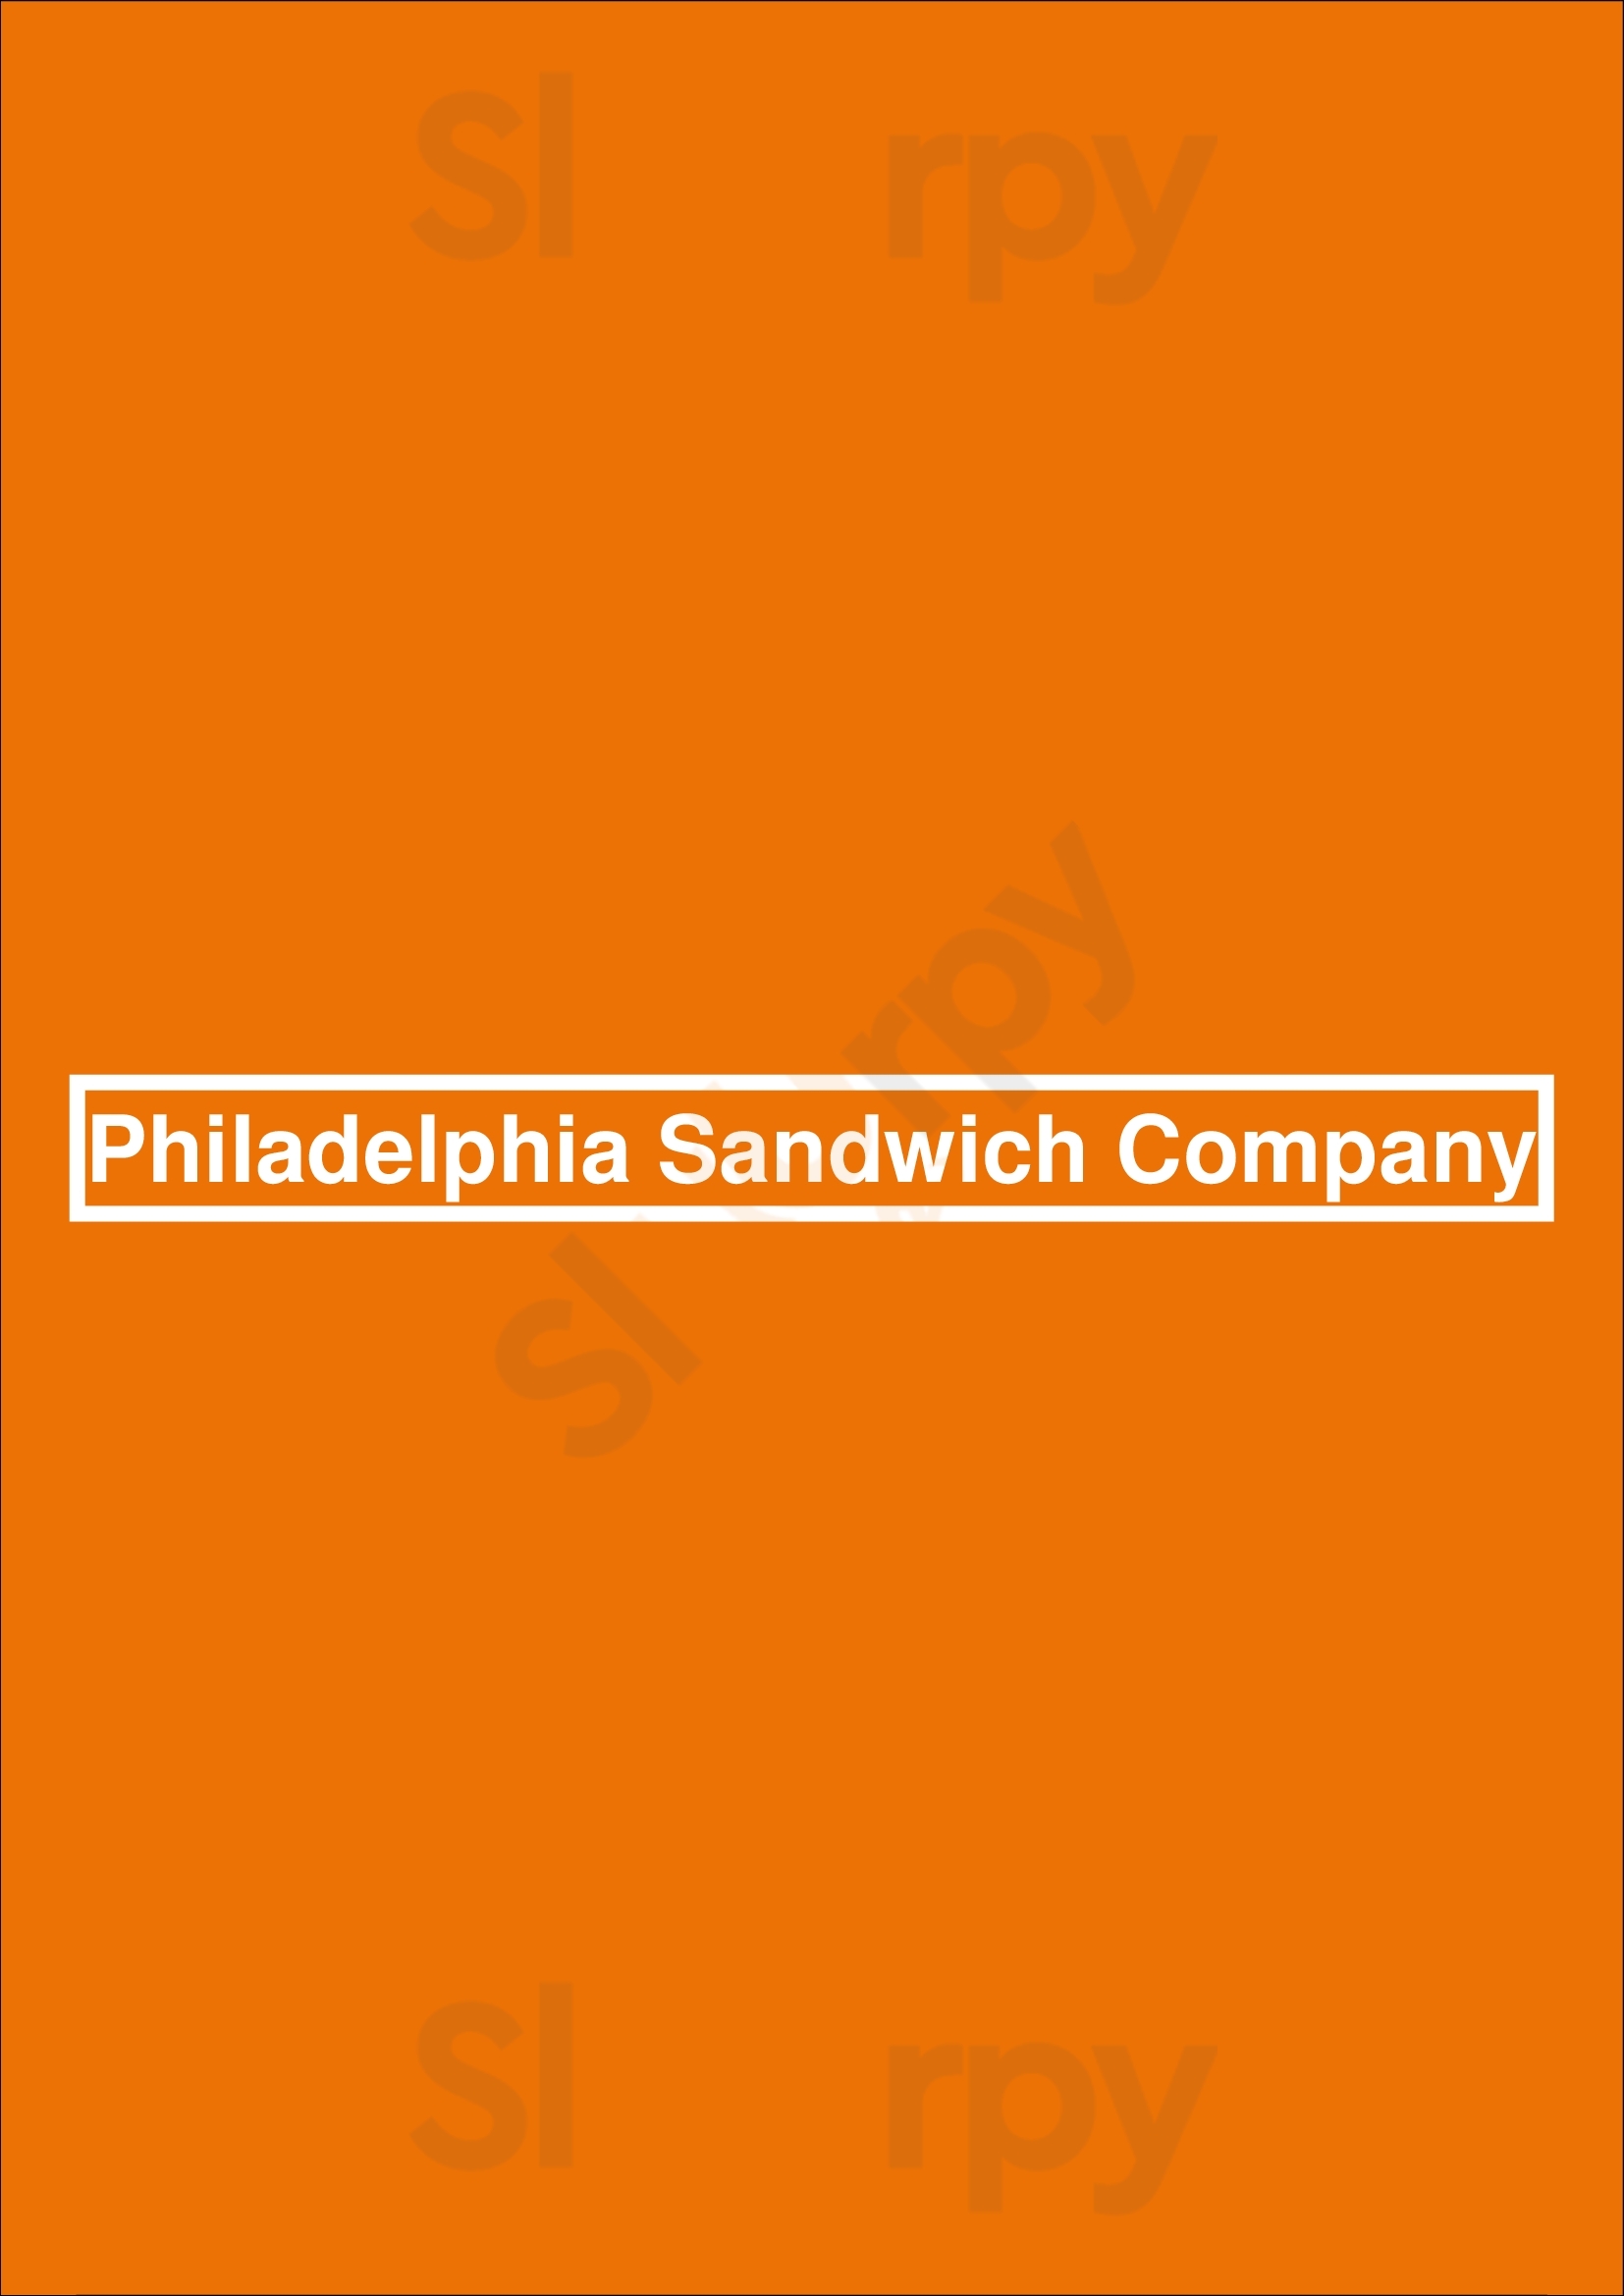 Philadelphia Sandwich Company Scottsdale Menu - 1